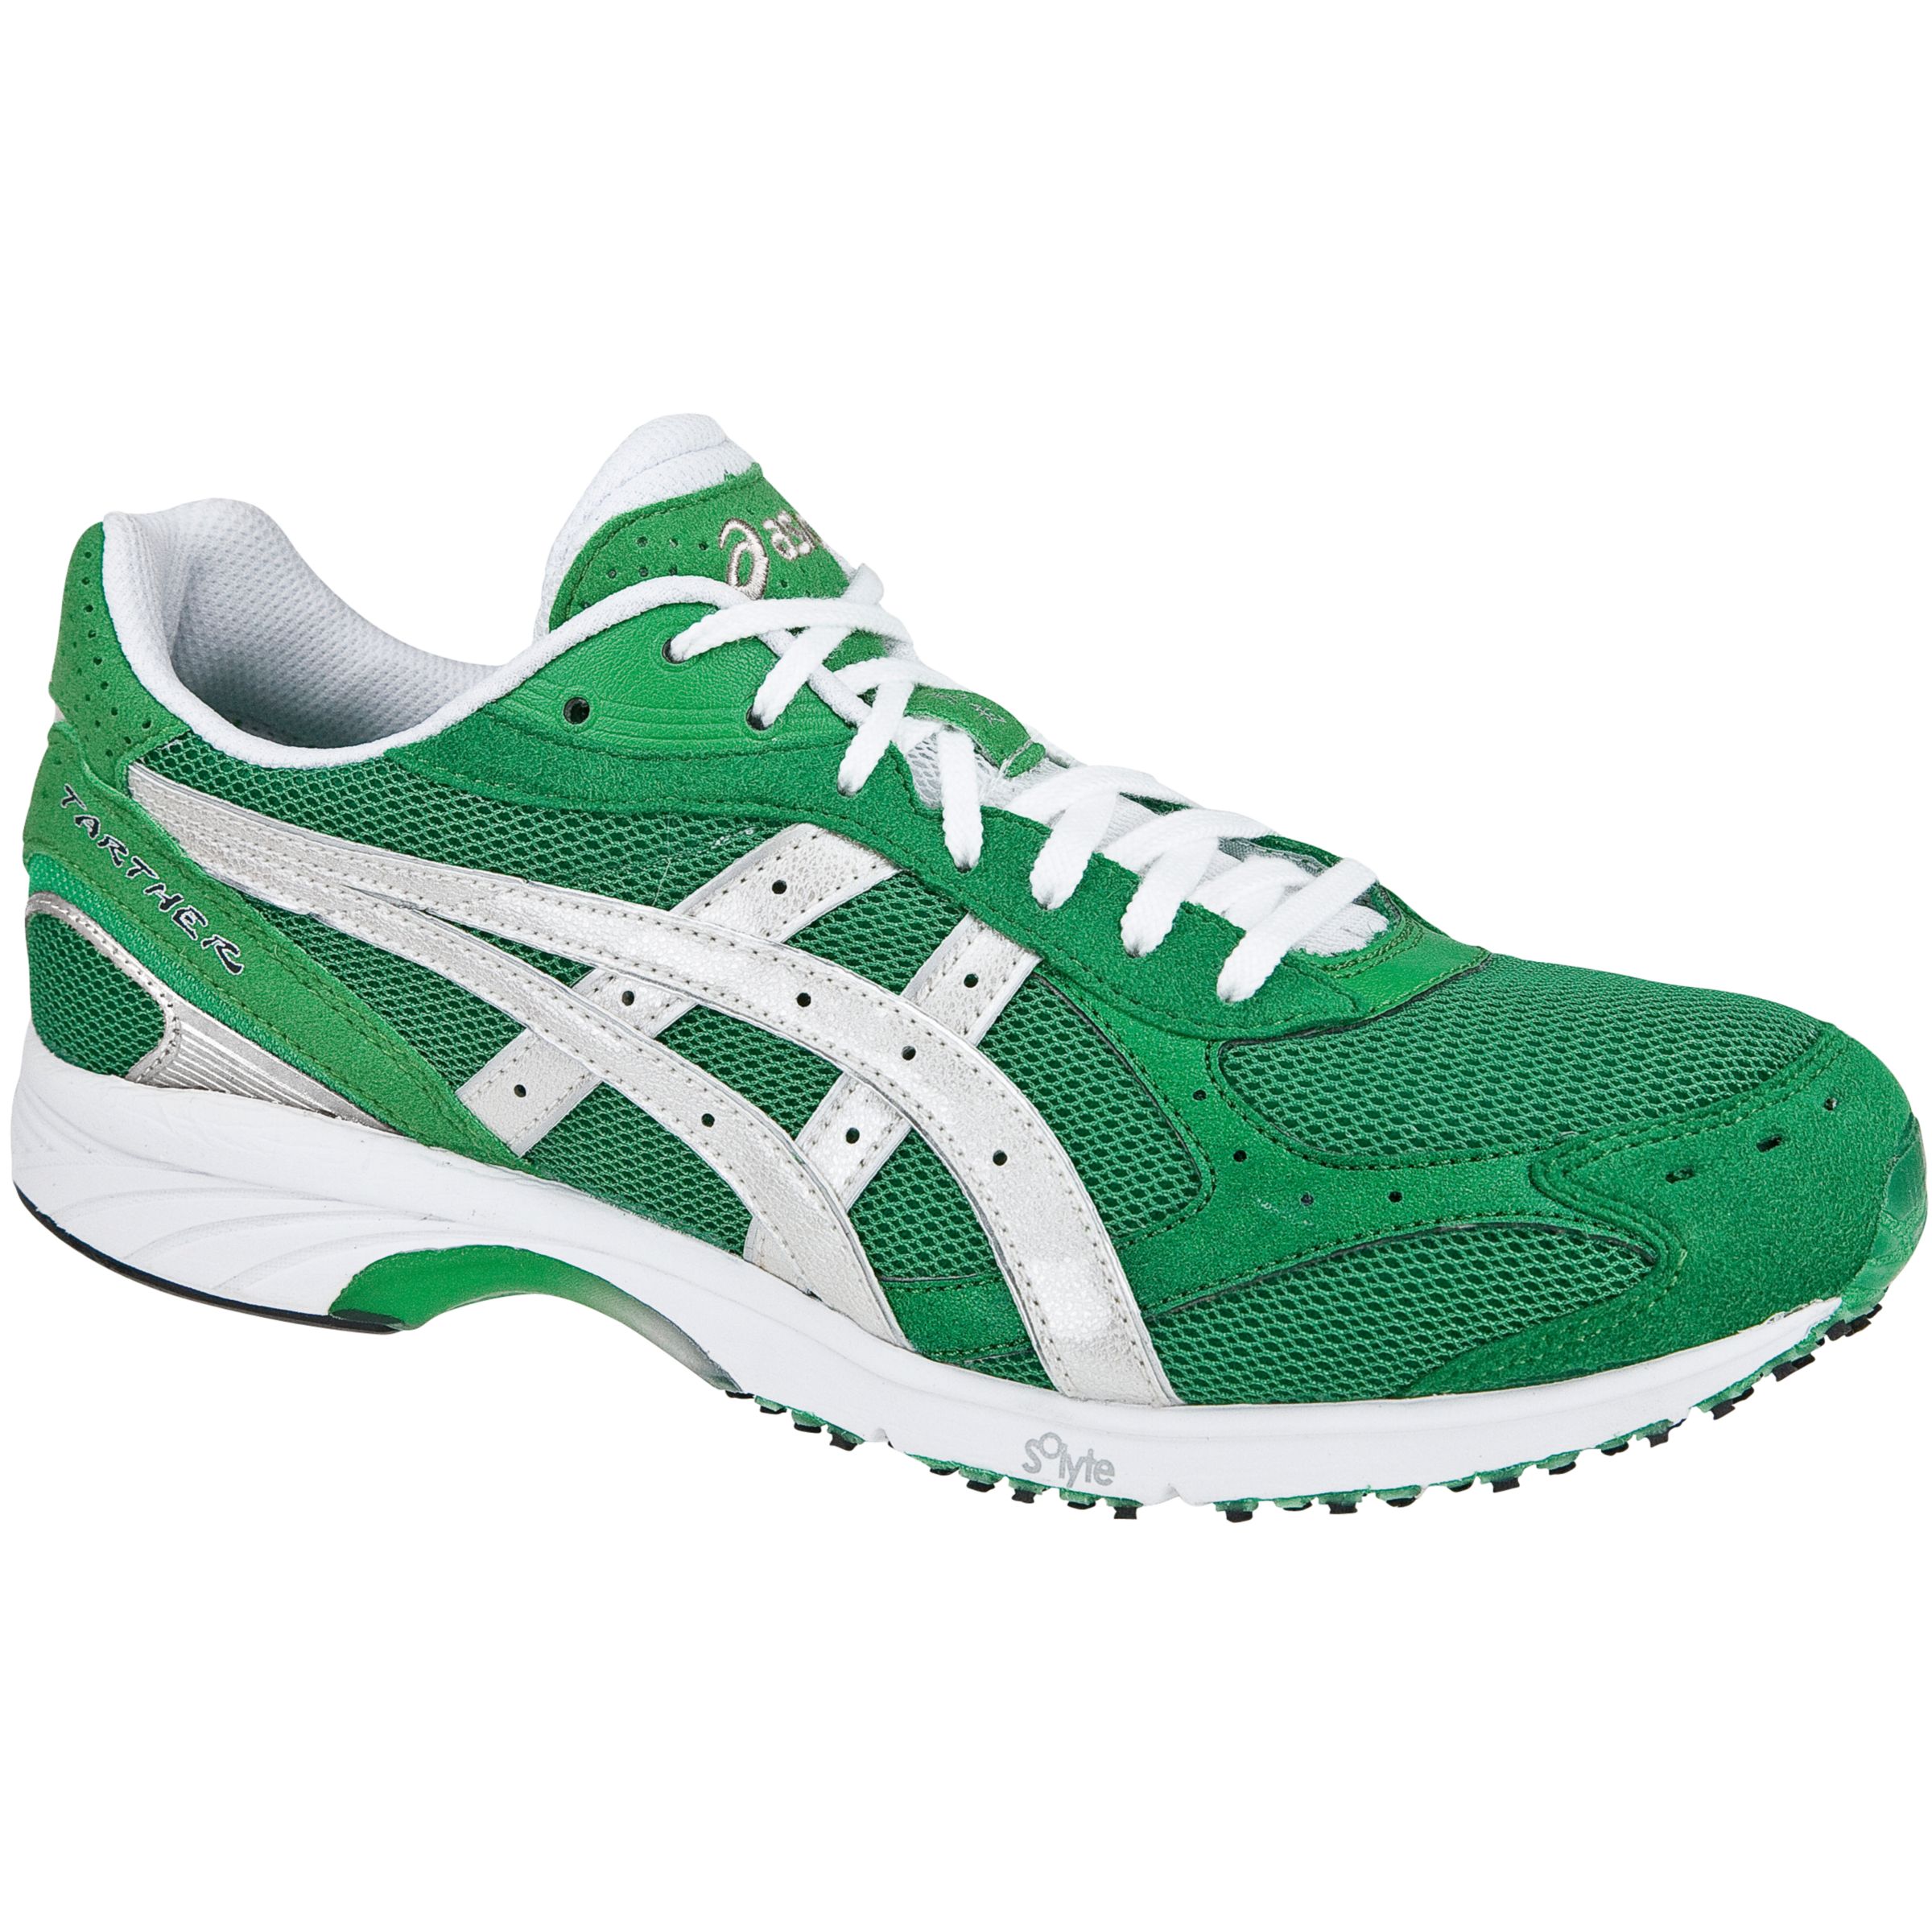 Gel Tarther Speed Running Shoes, Green/White